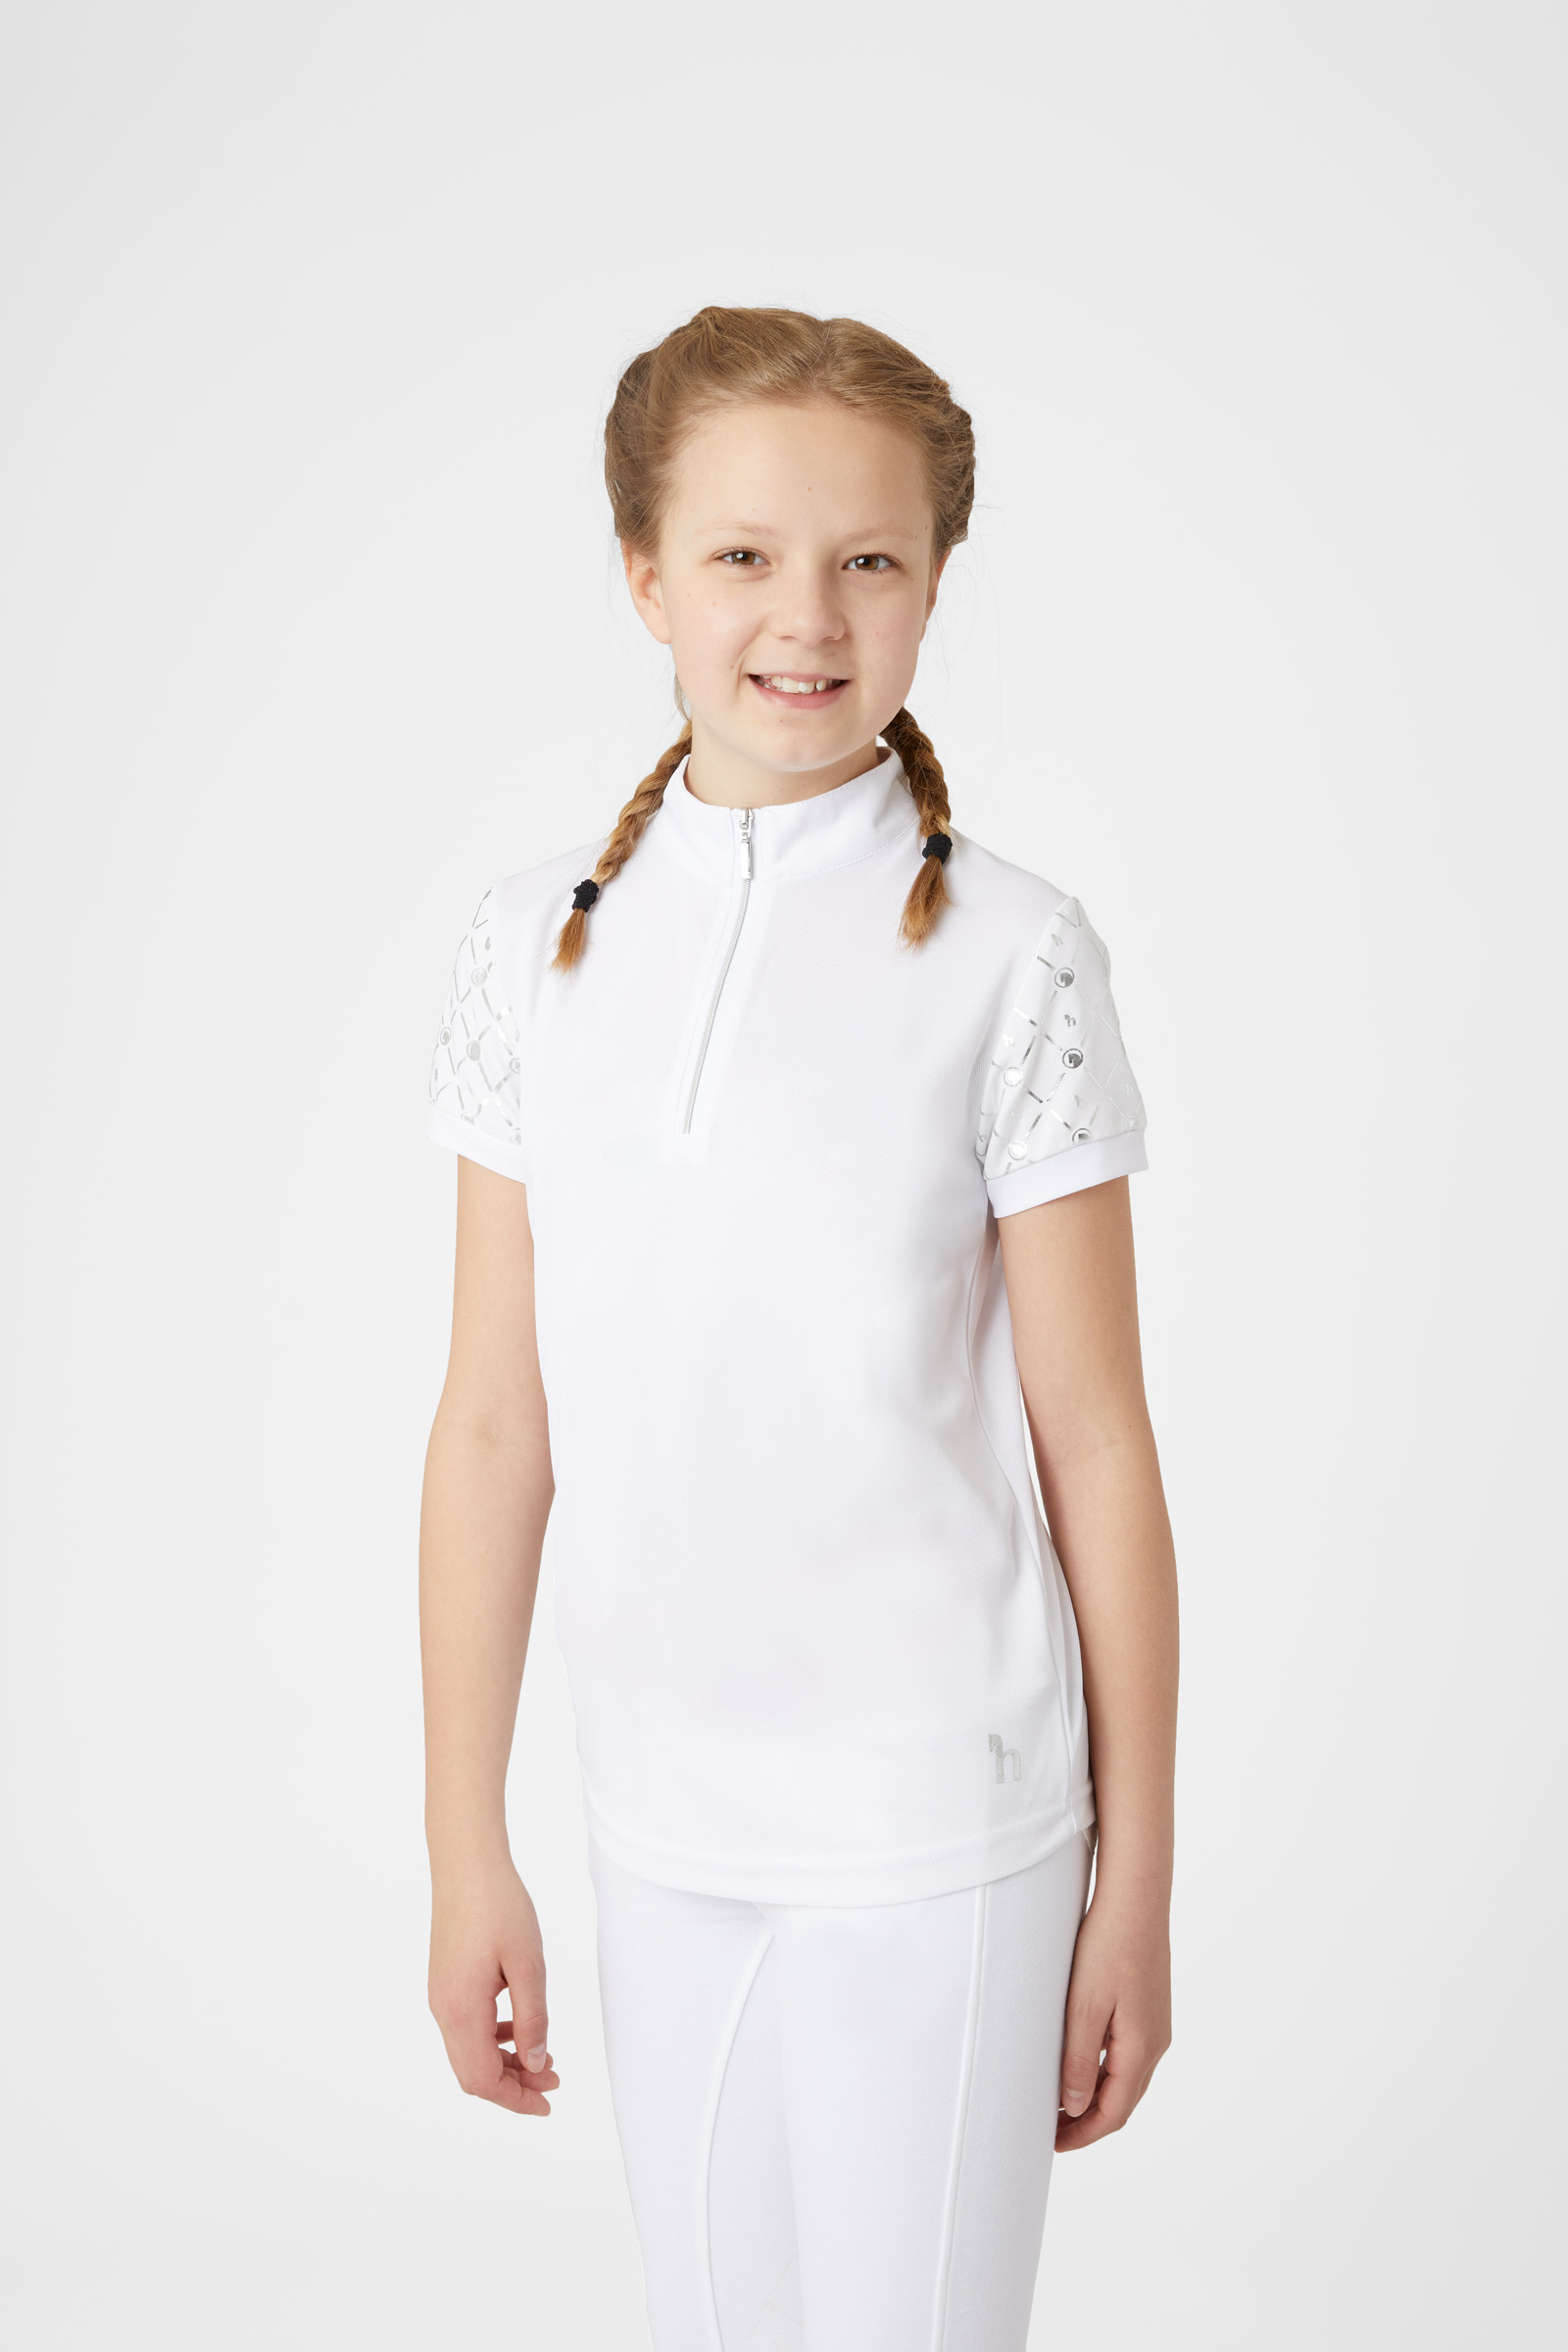 Buy Horze Fia Kids Training/Show Shirt with Short Sleeves